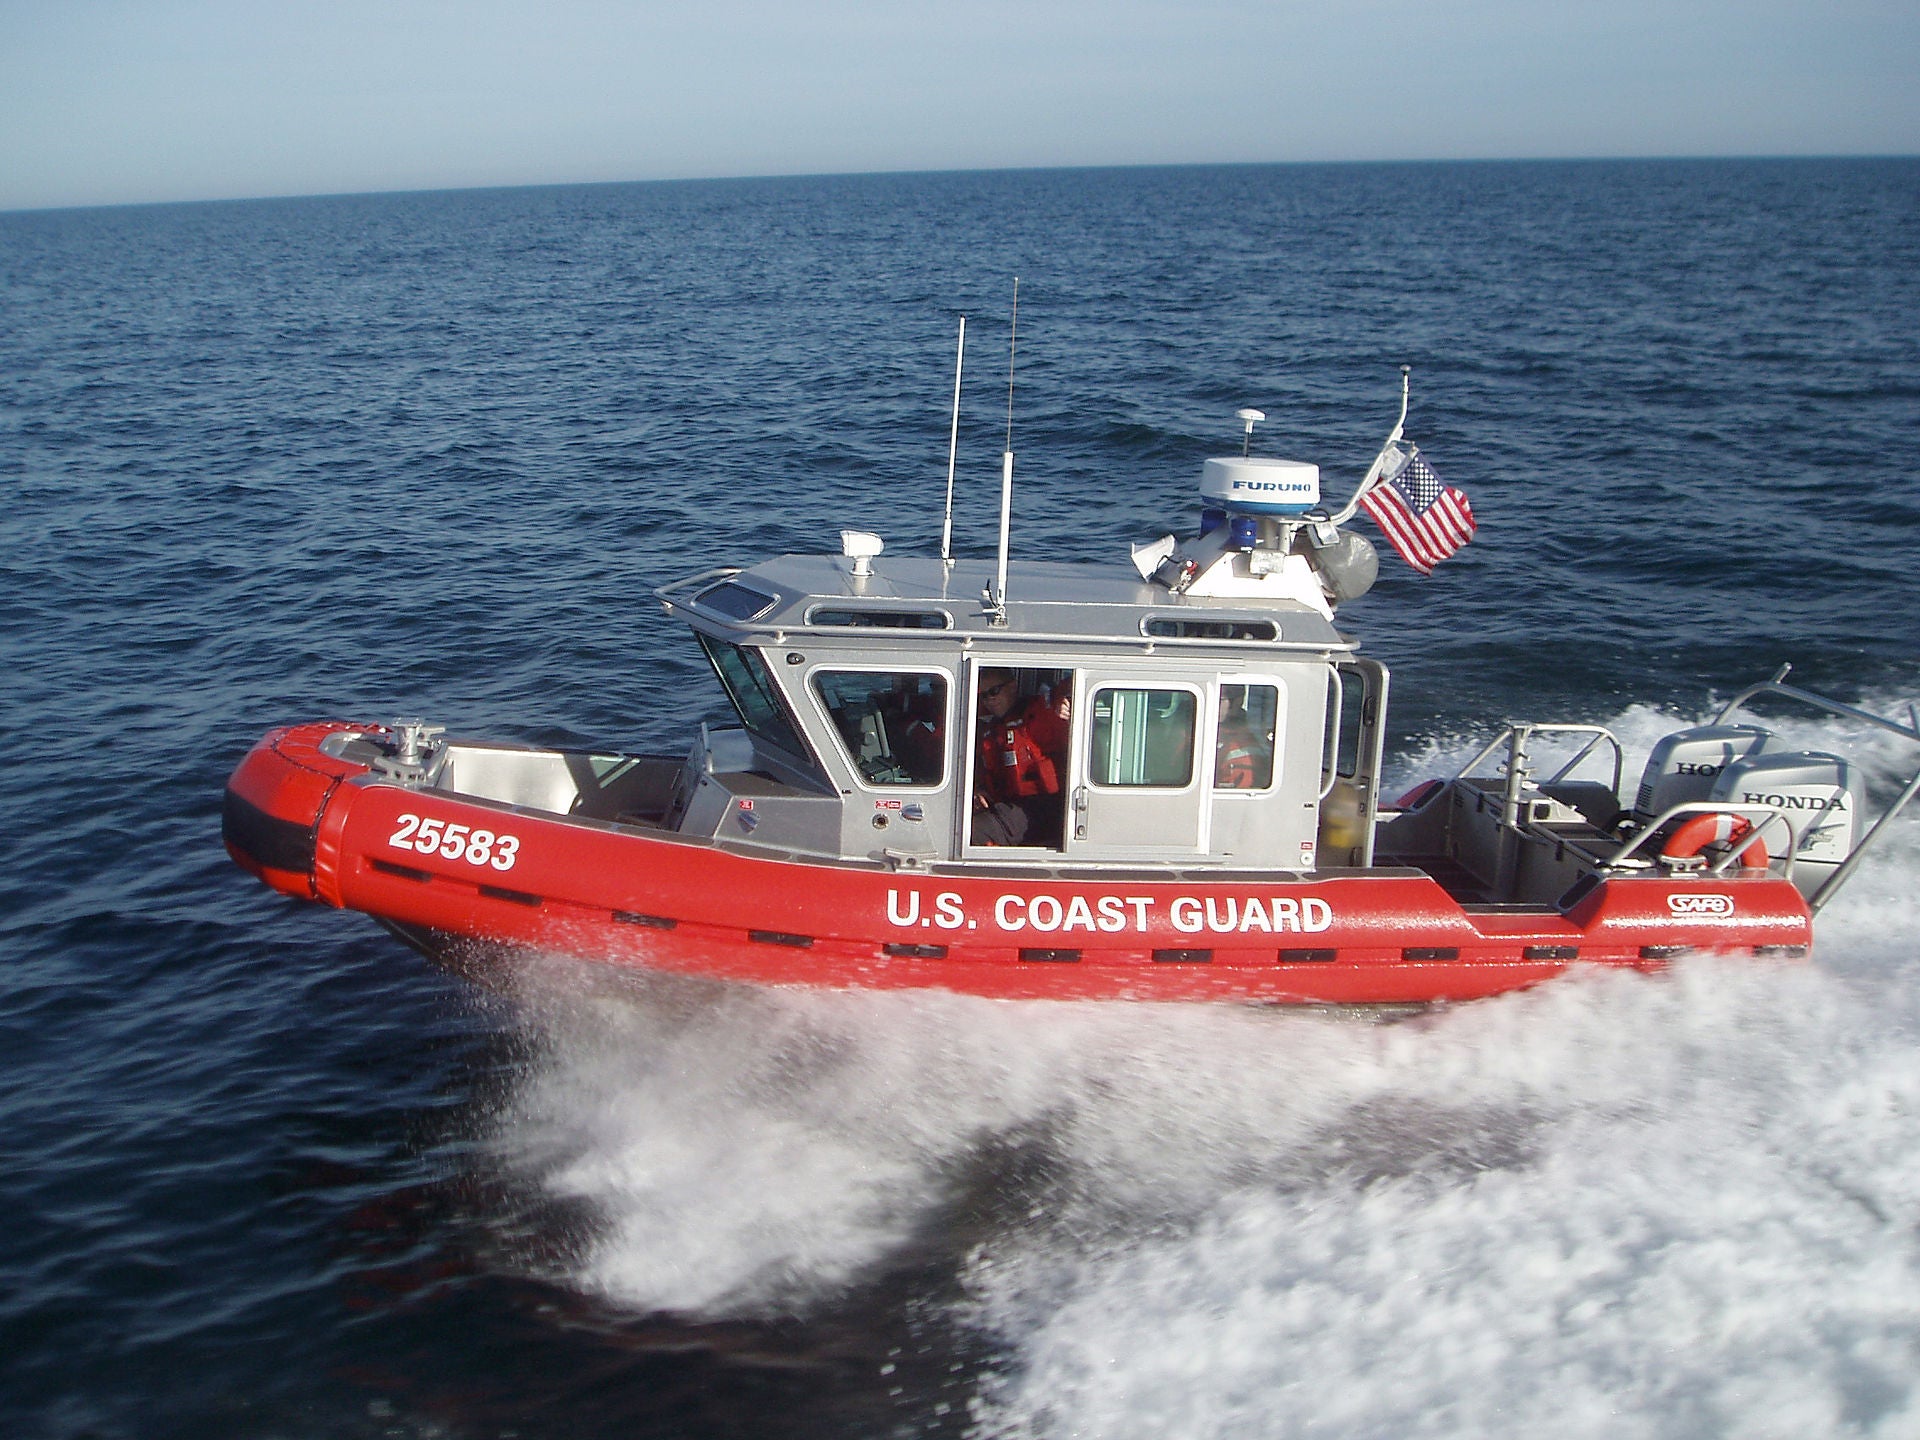 U.S. Coast Guard image.